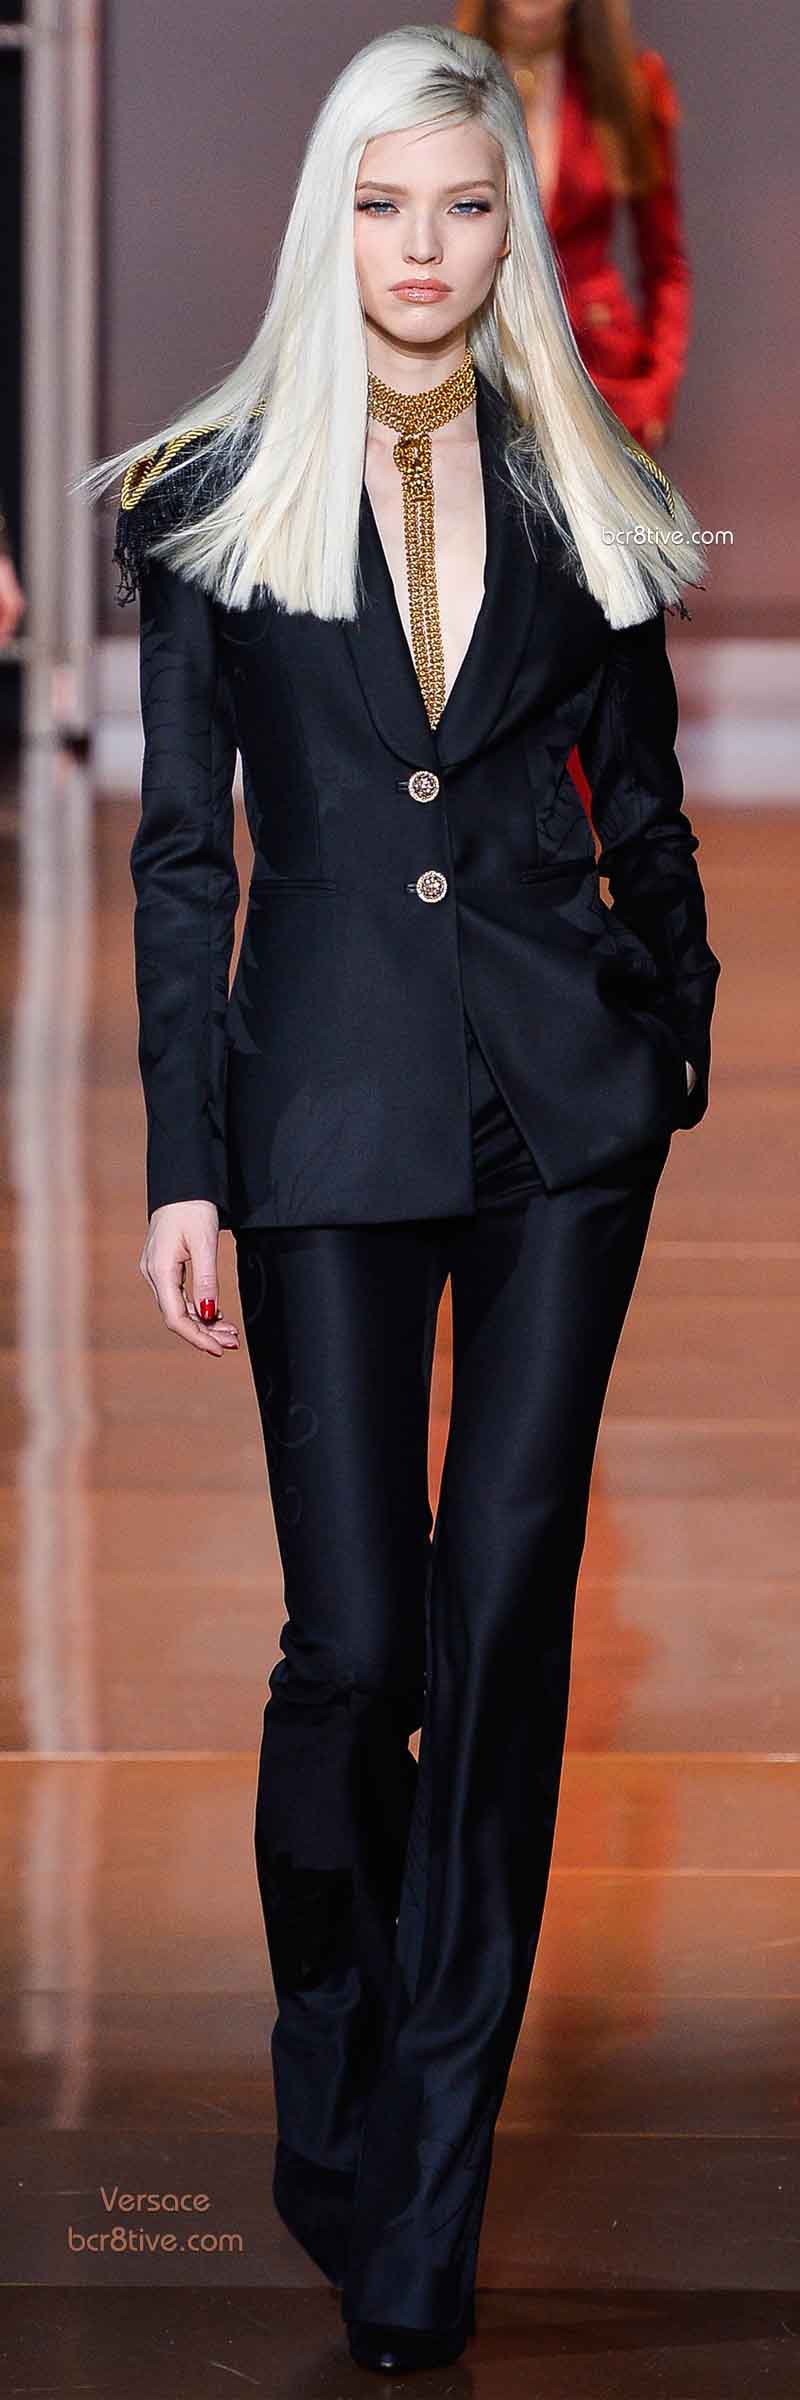 Fall 2014 Menswear Inspired Fashion - Versace